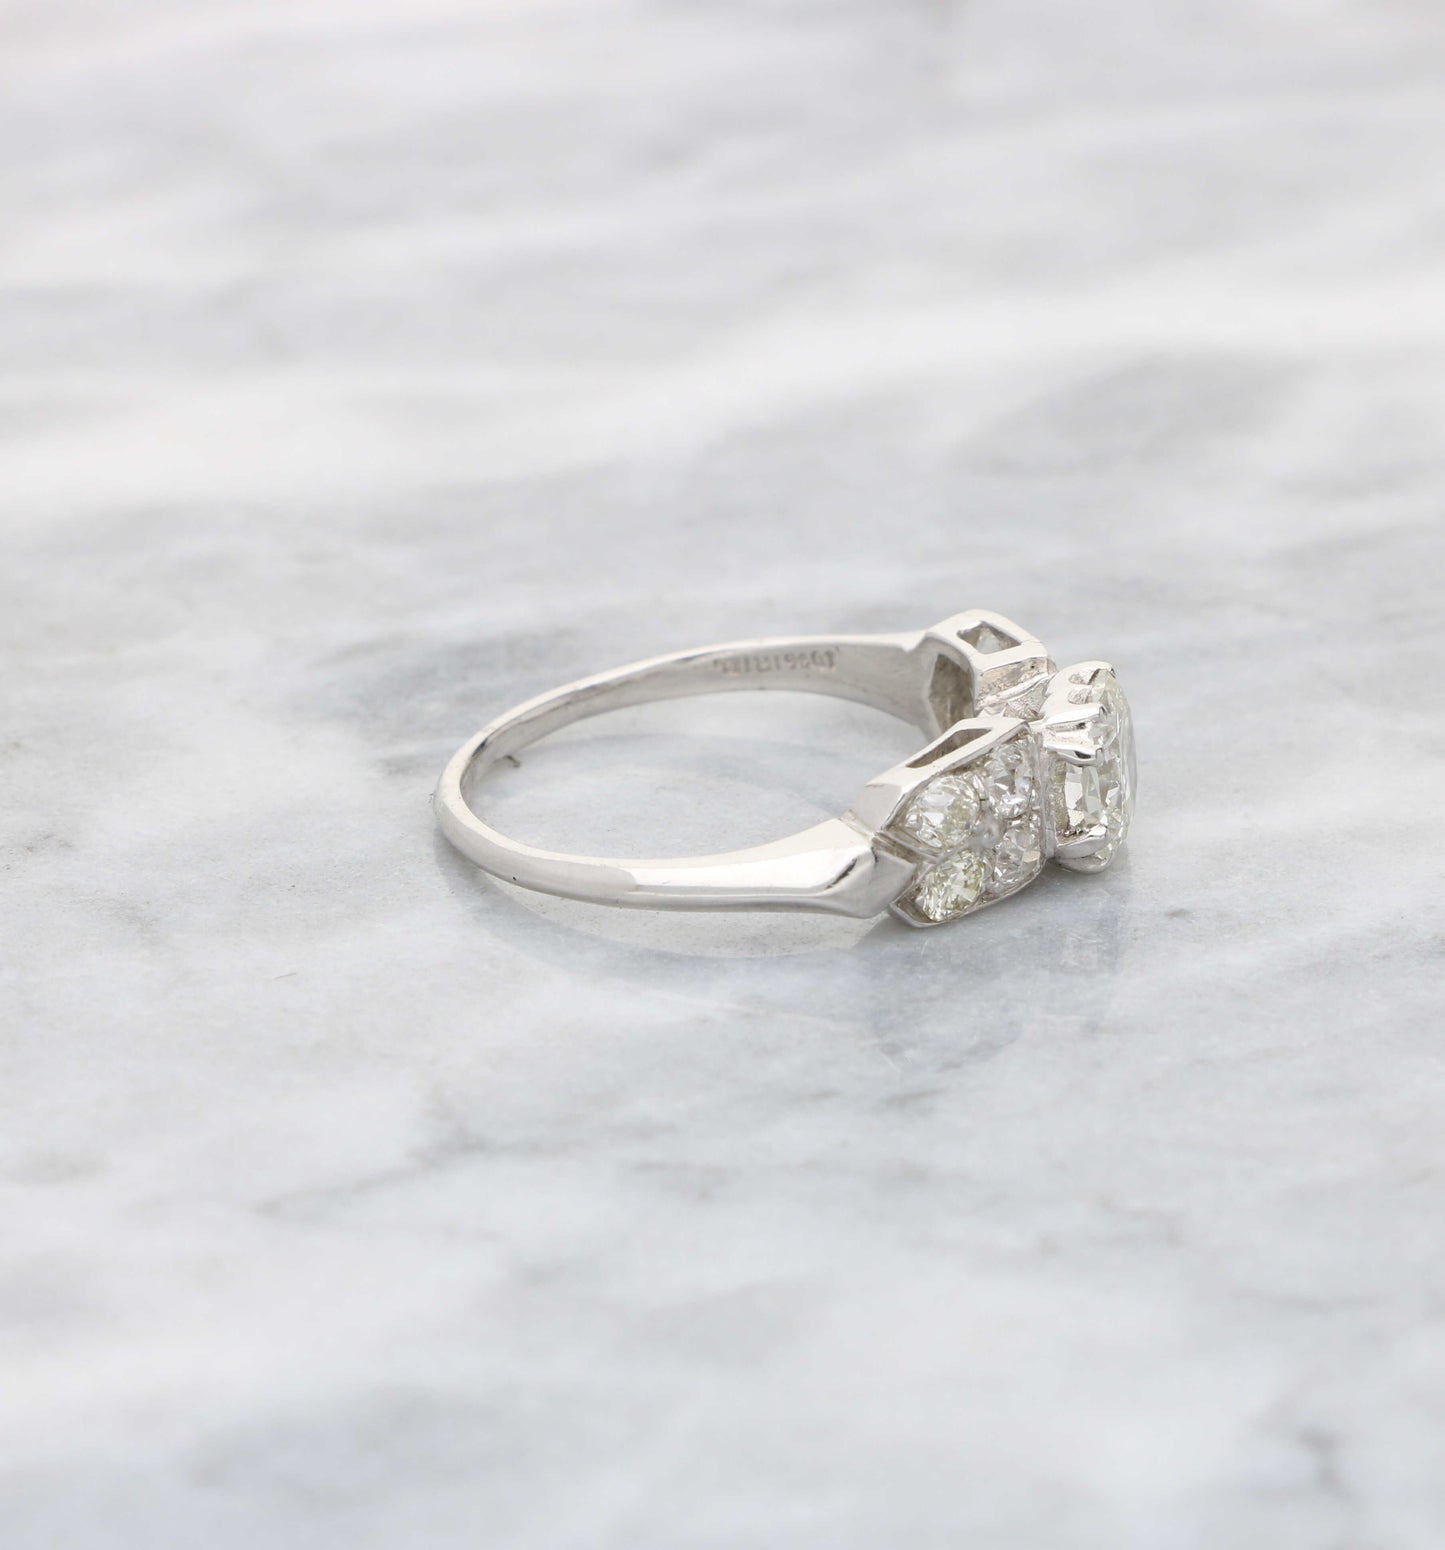 Platinum GIA 0.91ct old cut cushion diamond engagement ring